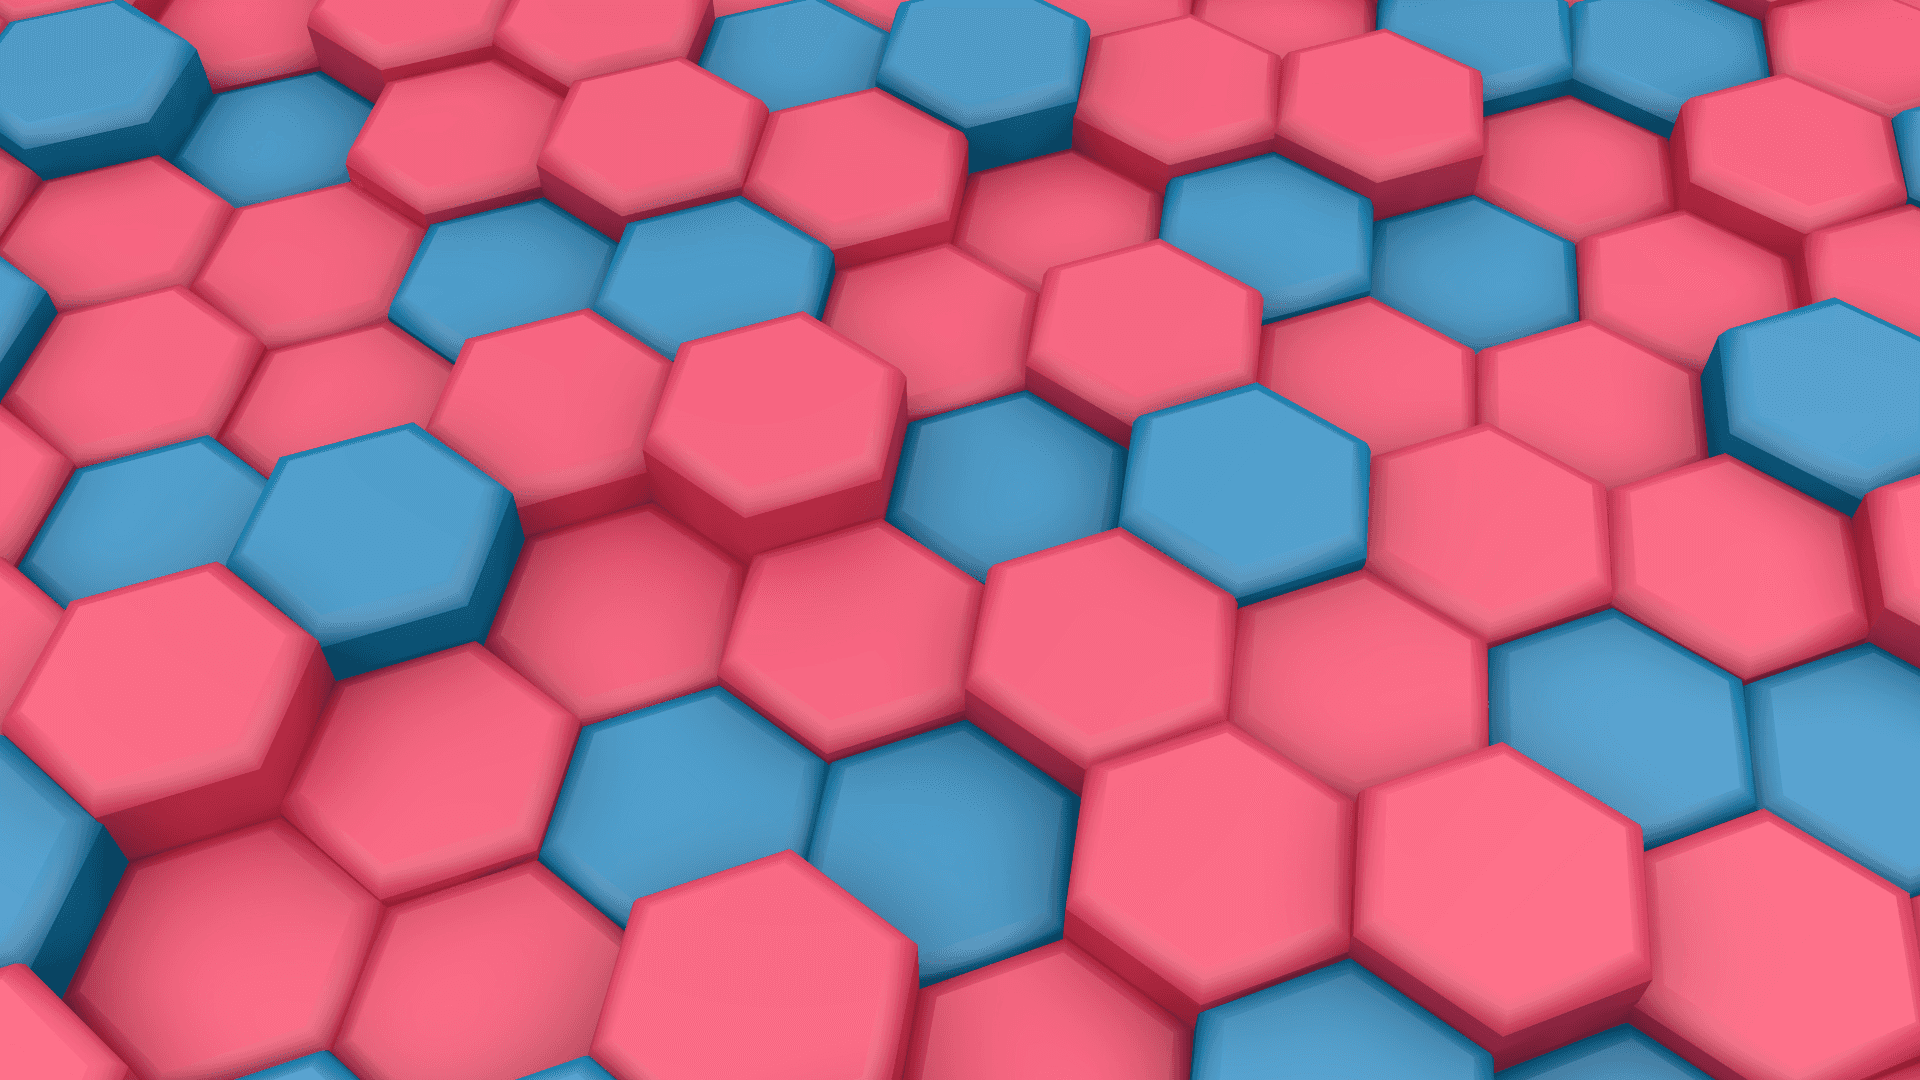 Hexagon - the ultimate geometric shape